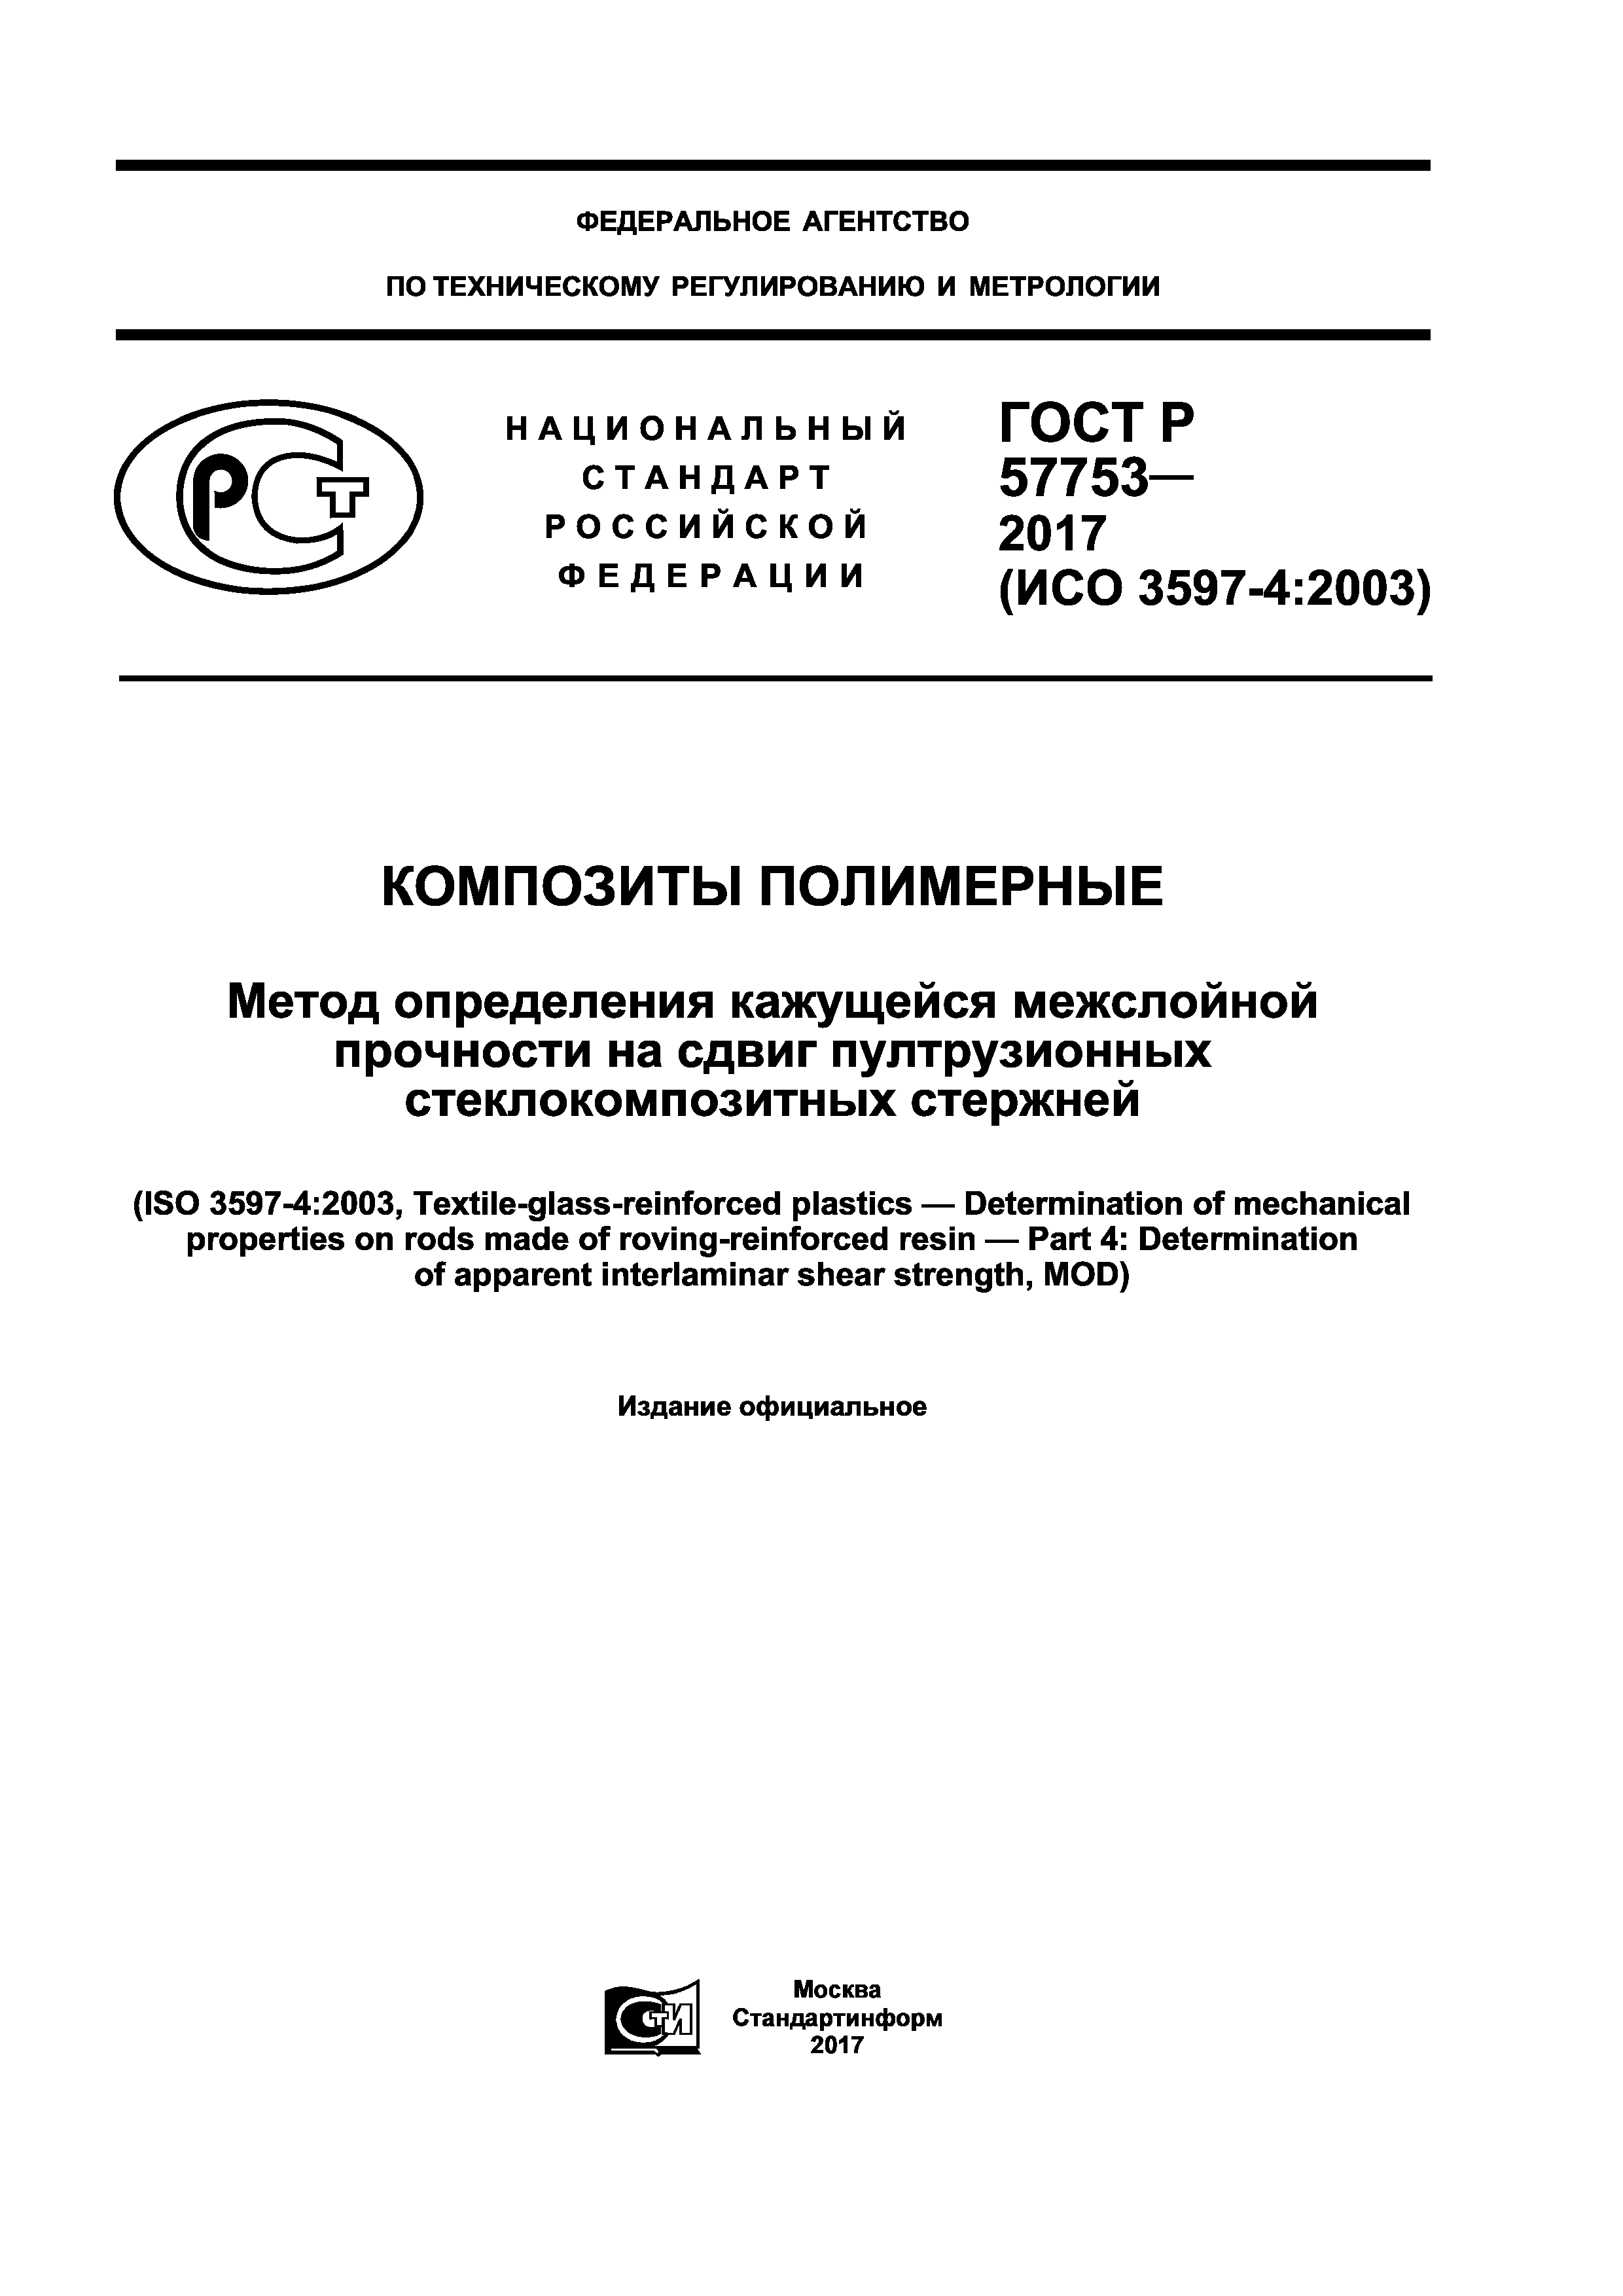 ГОСТ Р 57753-2017